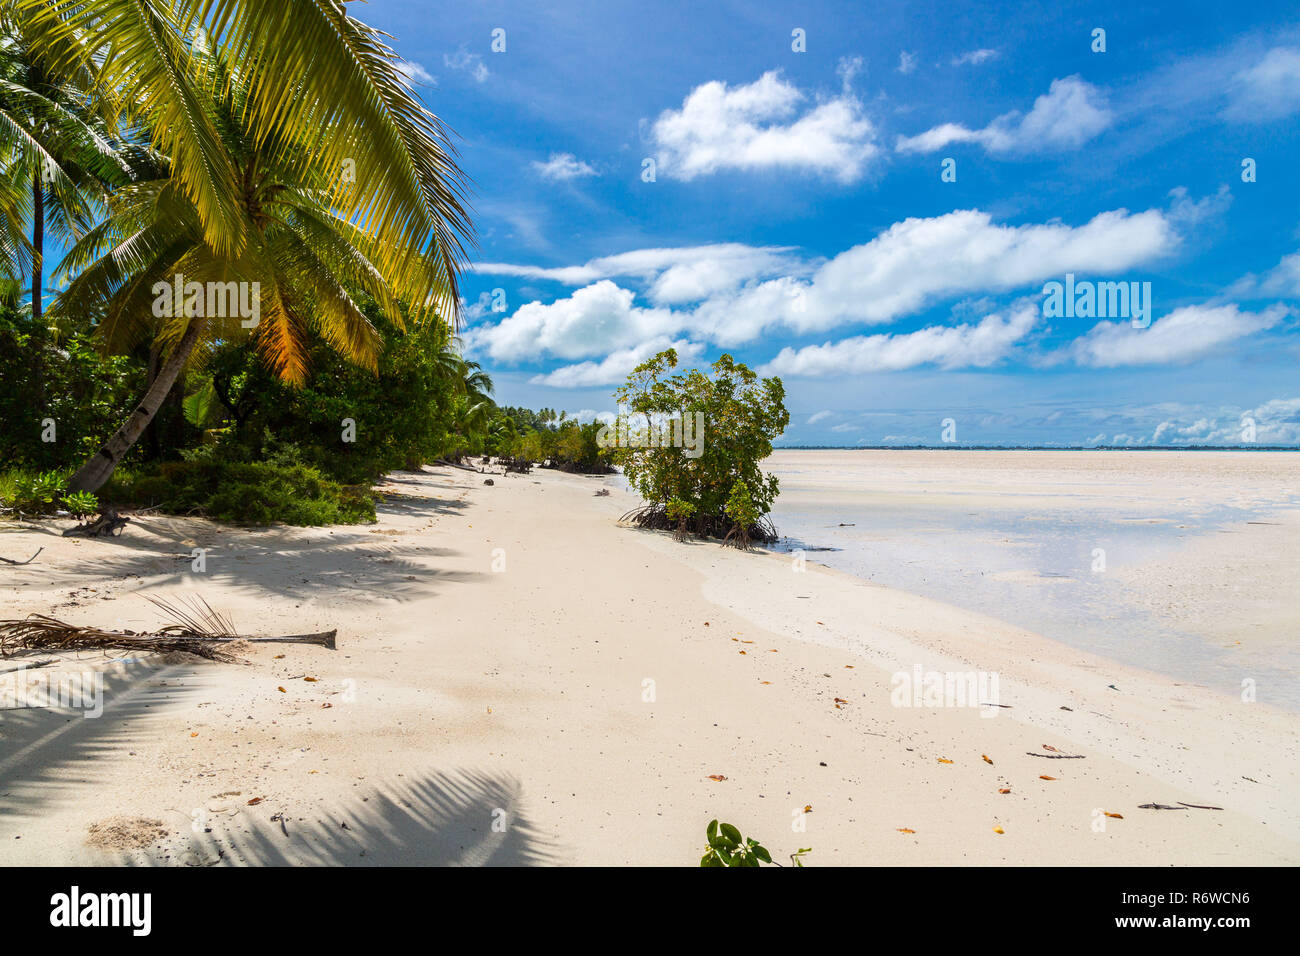 Paradisíaca playa de arena azul azul turquesa laguna poco profunda, al norte el atolón de Tarawa, Kiribati, Islas Gilbert, Micronesia, Oceanía. Palmeras, manglares Foto de stock